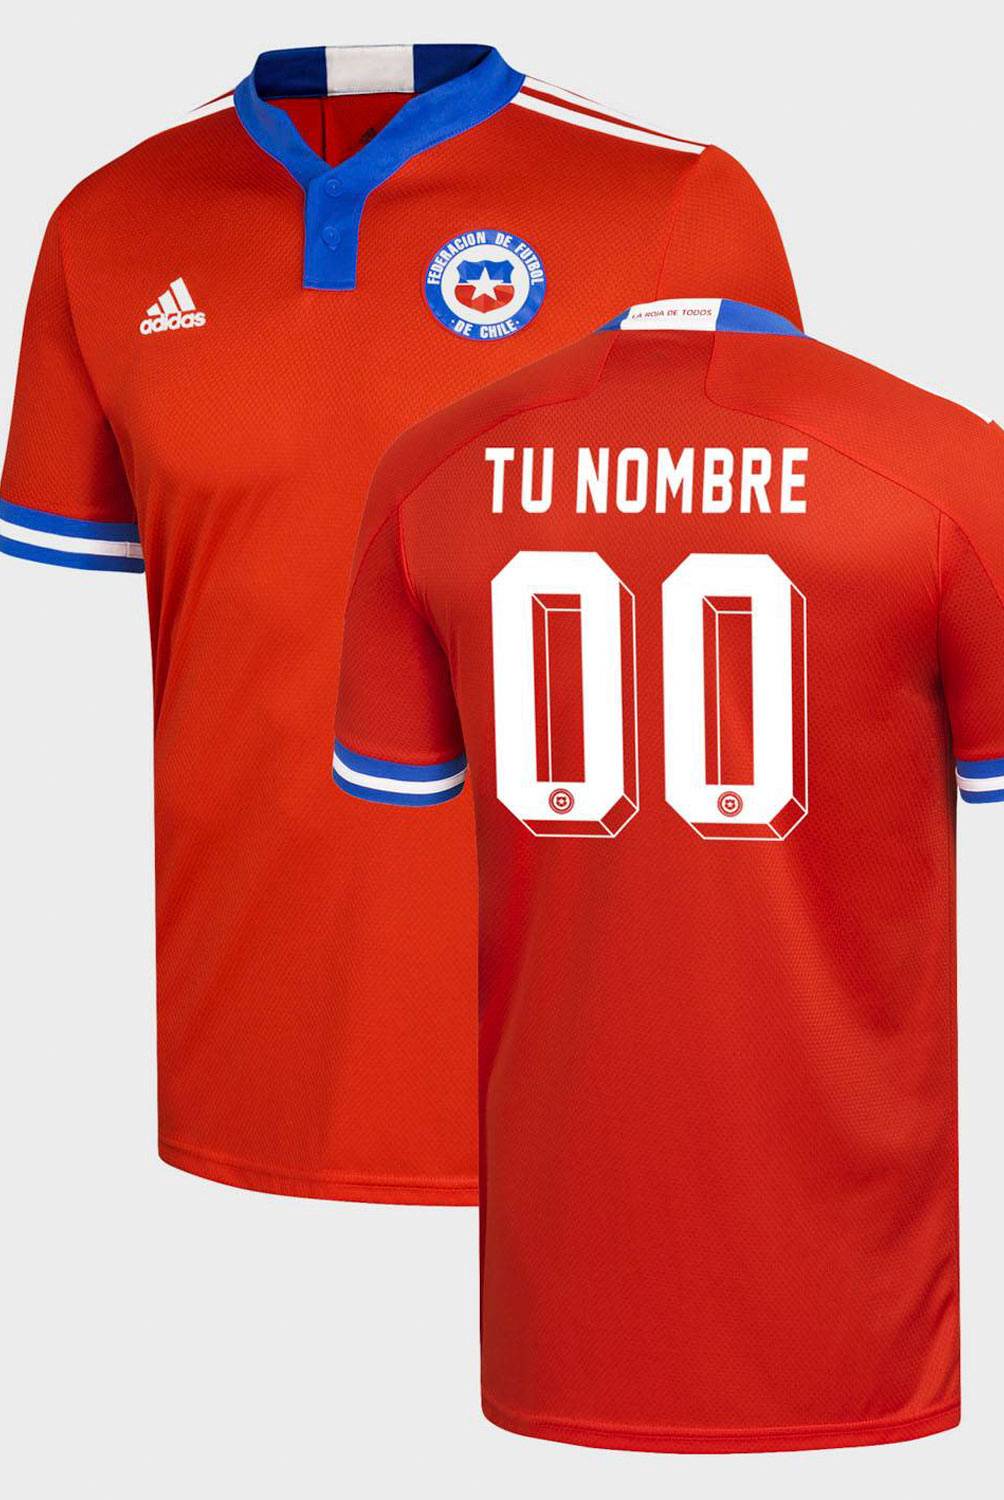 ADIDAS - Camiseta de Fútbol Niño Personificable Selección Chilena Local Adidas